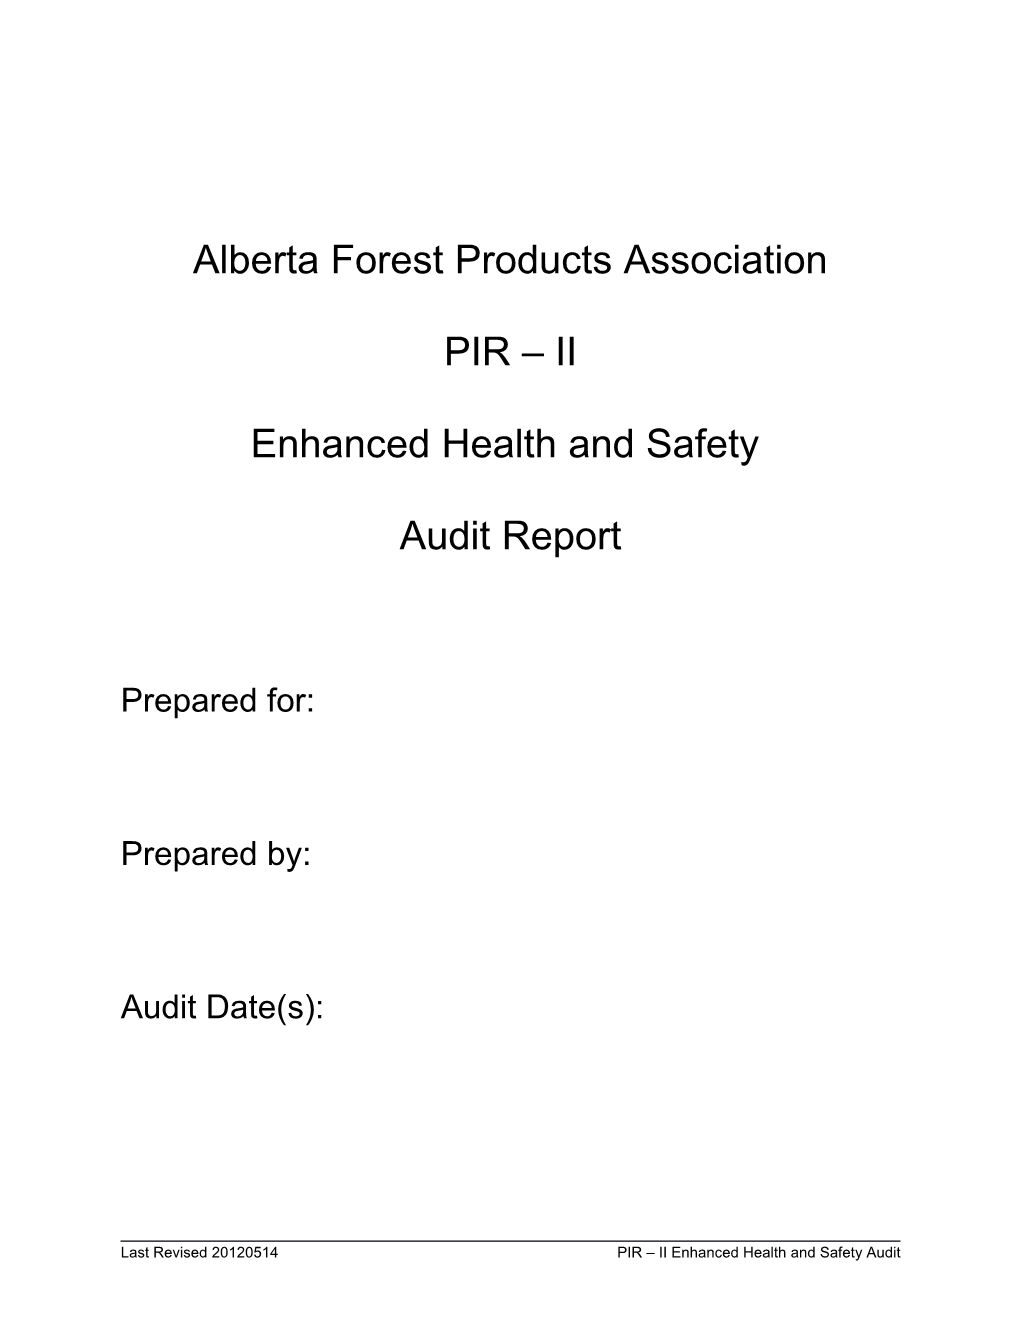 Last Revised 20120514PIR II Enhanced Health and Safety Audit